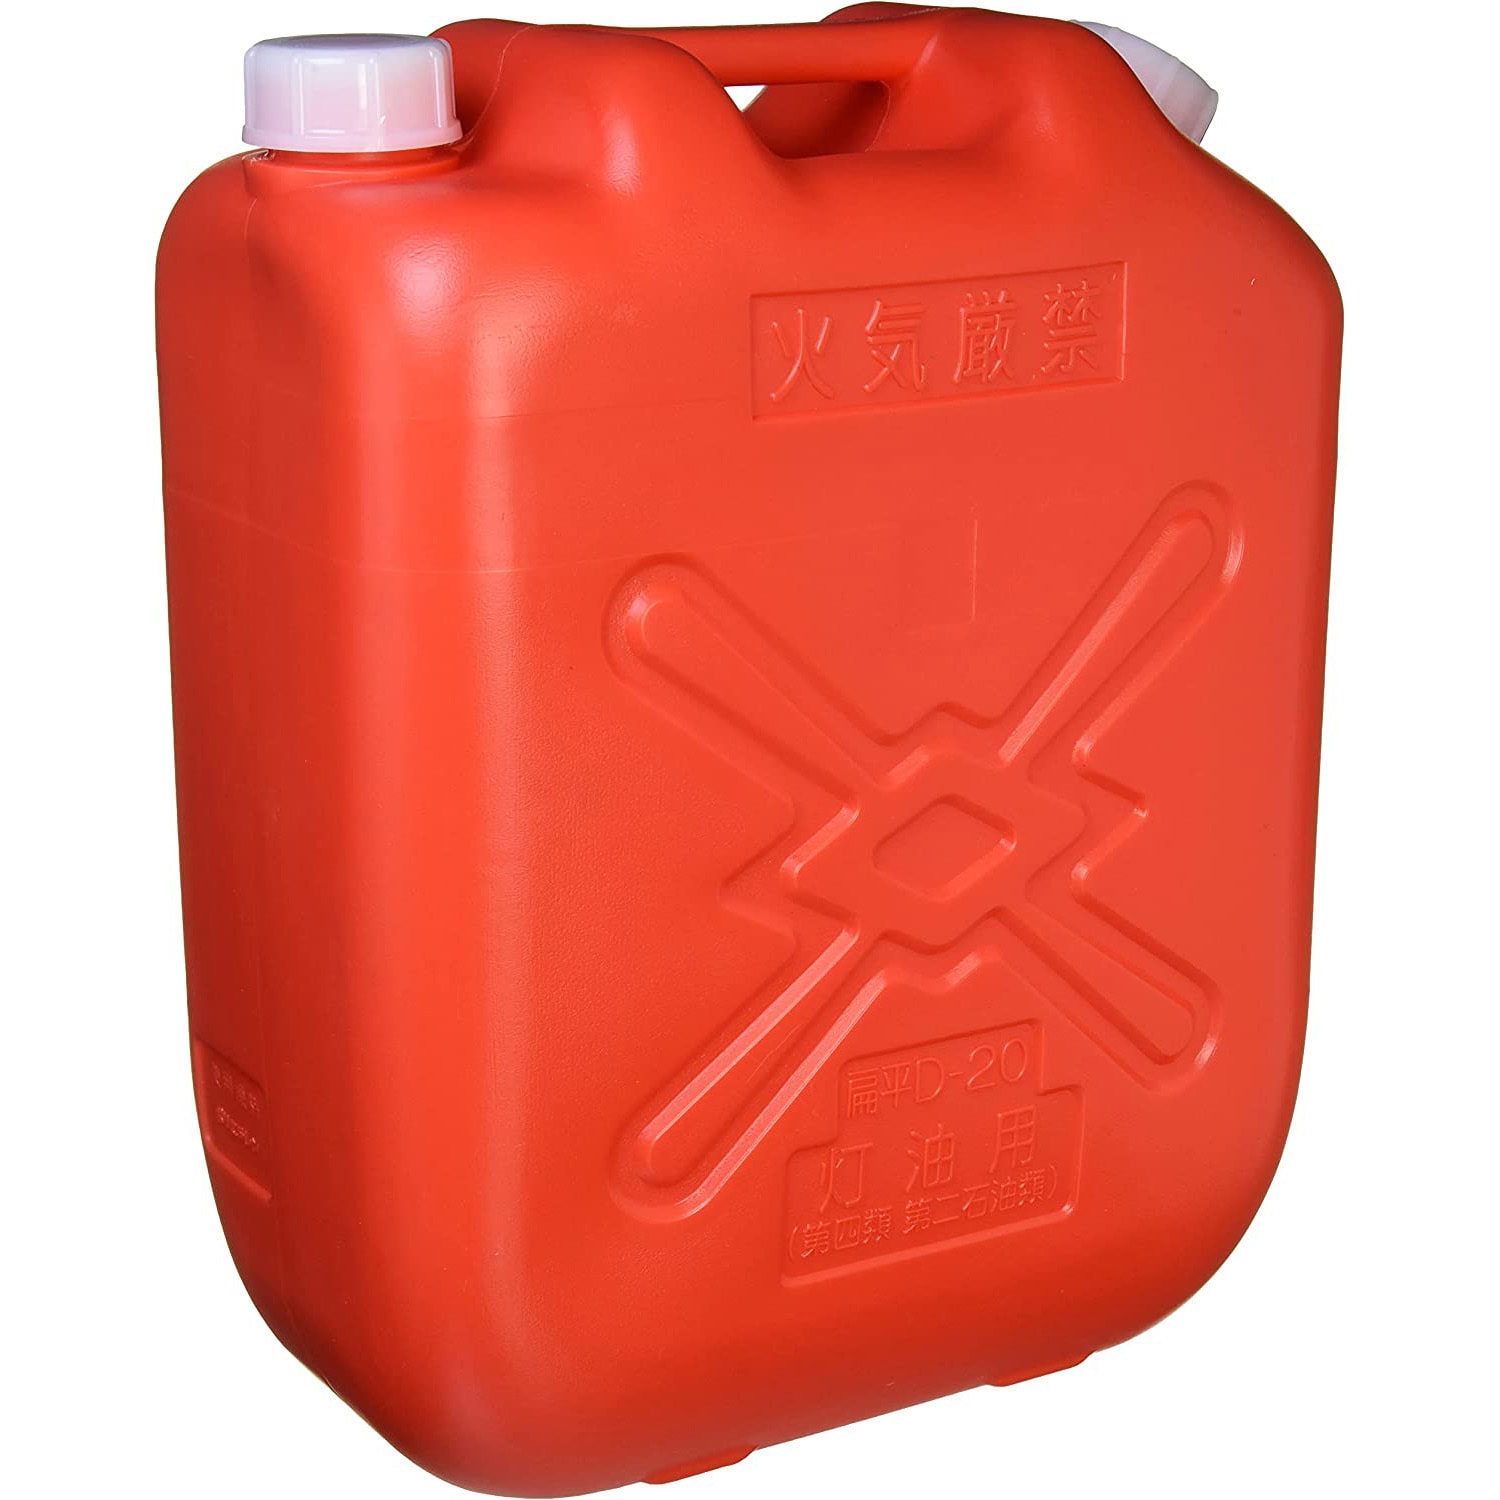 数量は多】 北陸土井工業 ポリ軽油缶 20L 消防法適合品